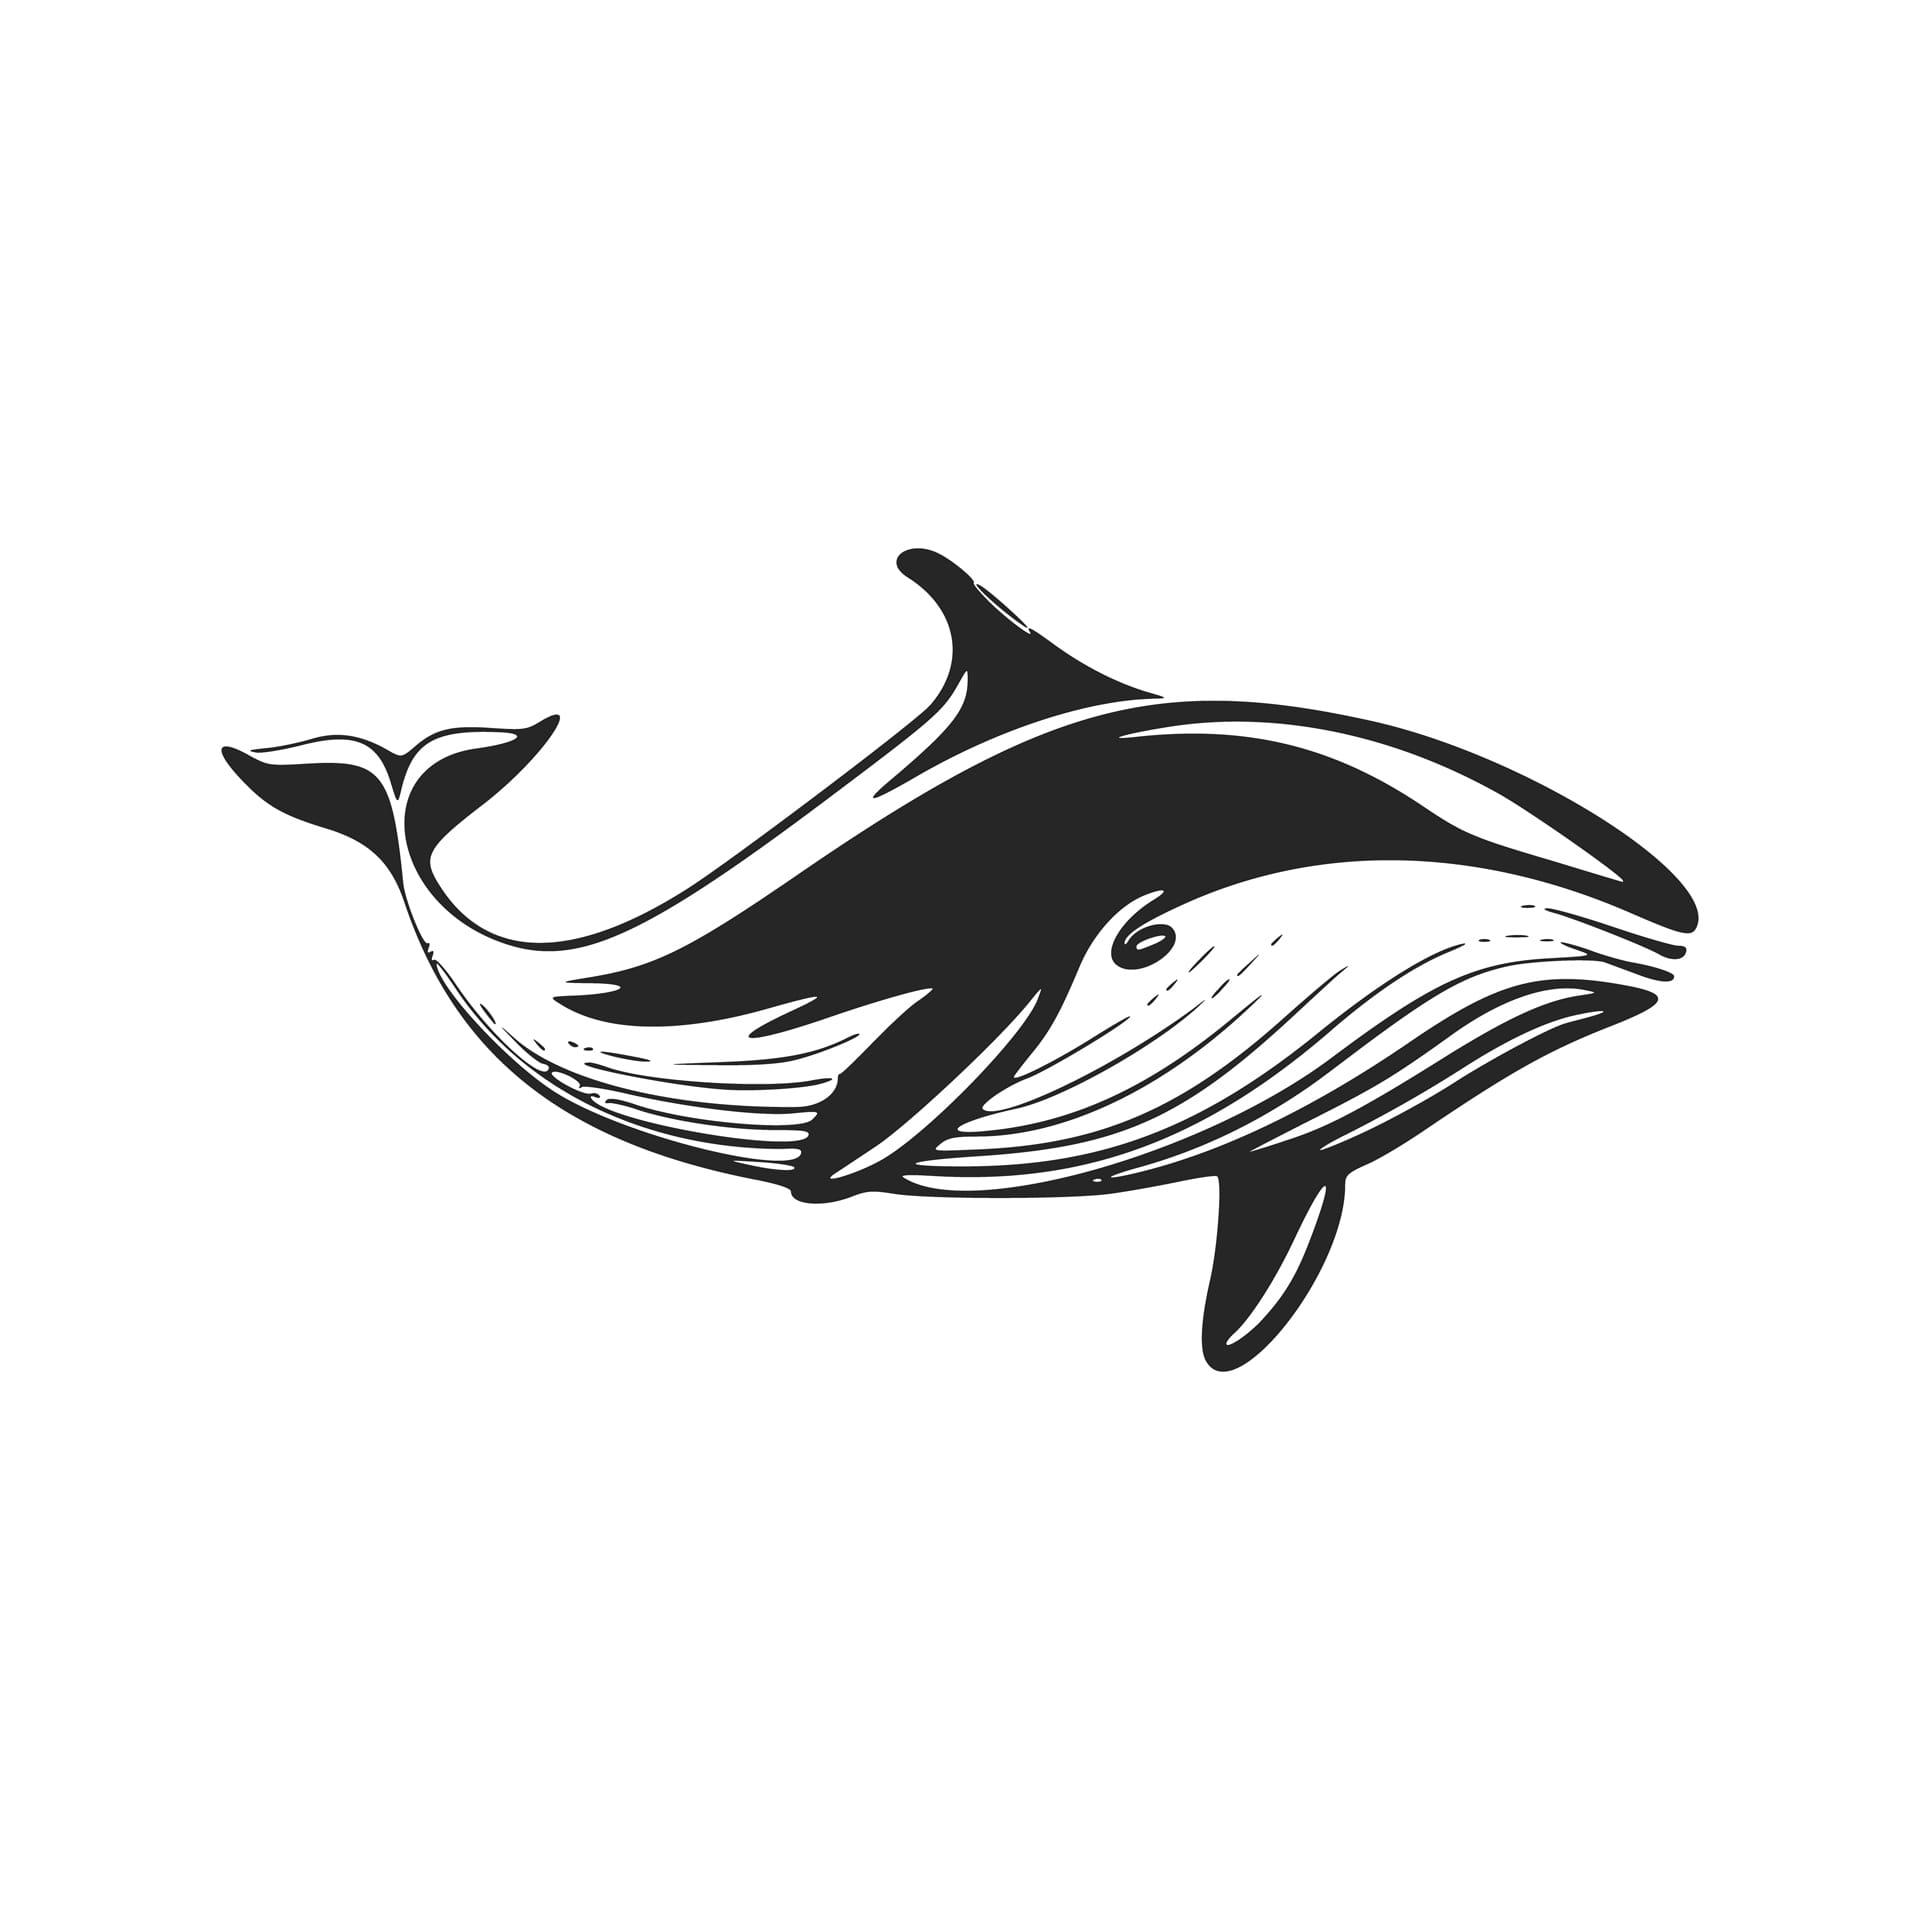 Striking black white whale drawing illustration